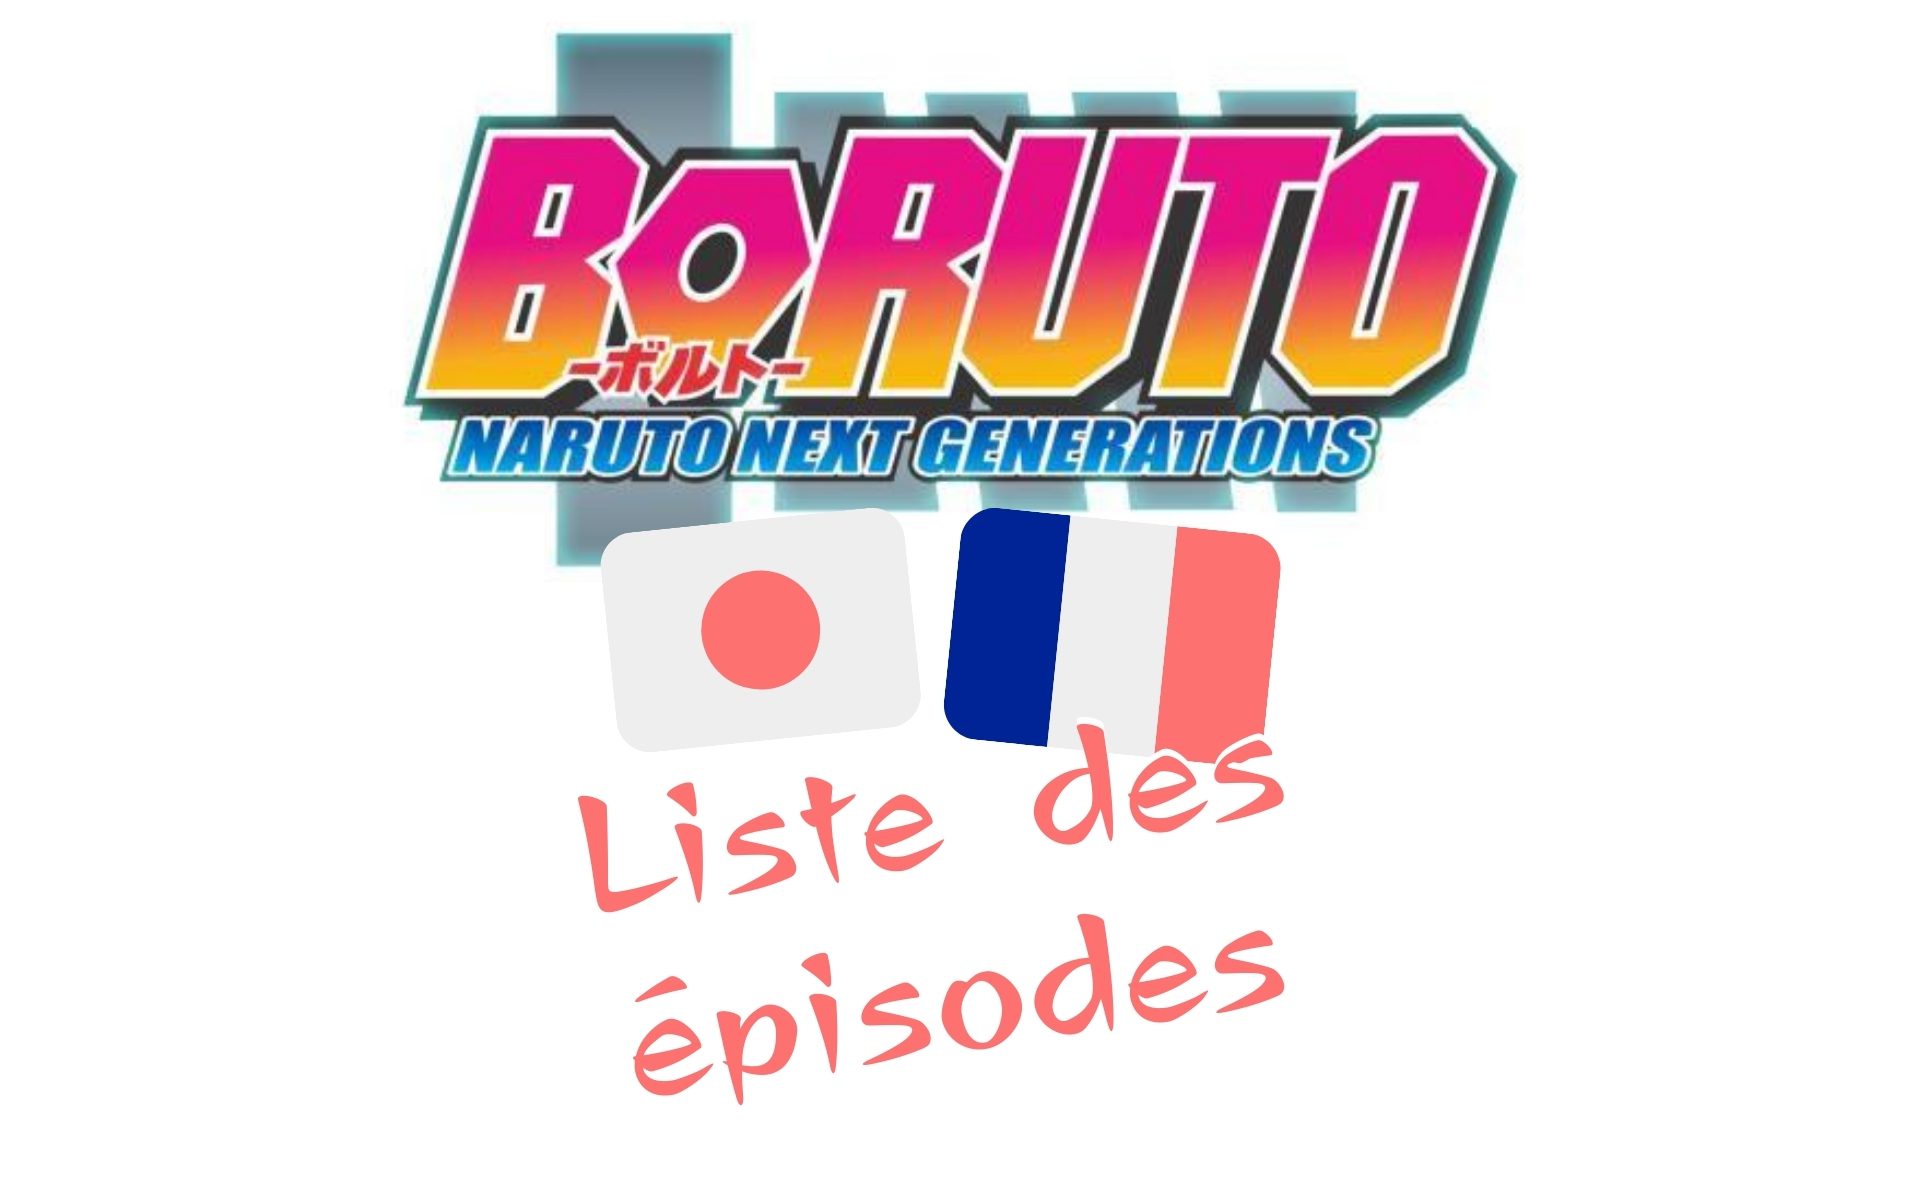 liste des episodes de boruto naruto next generations a jour